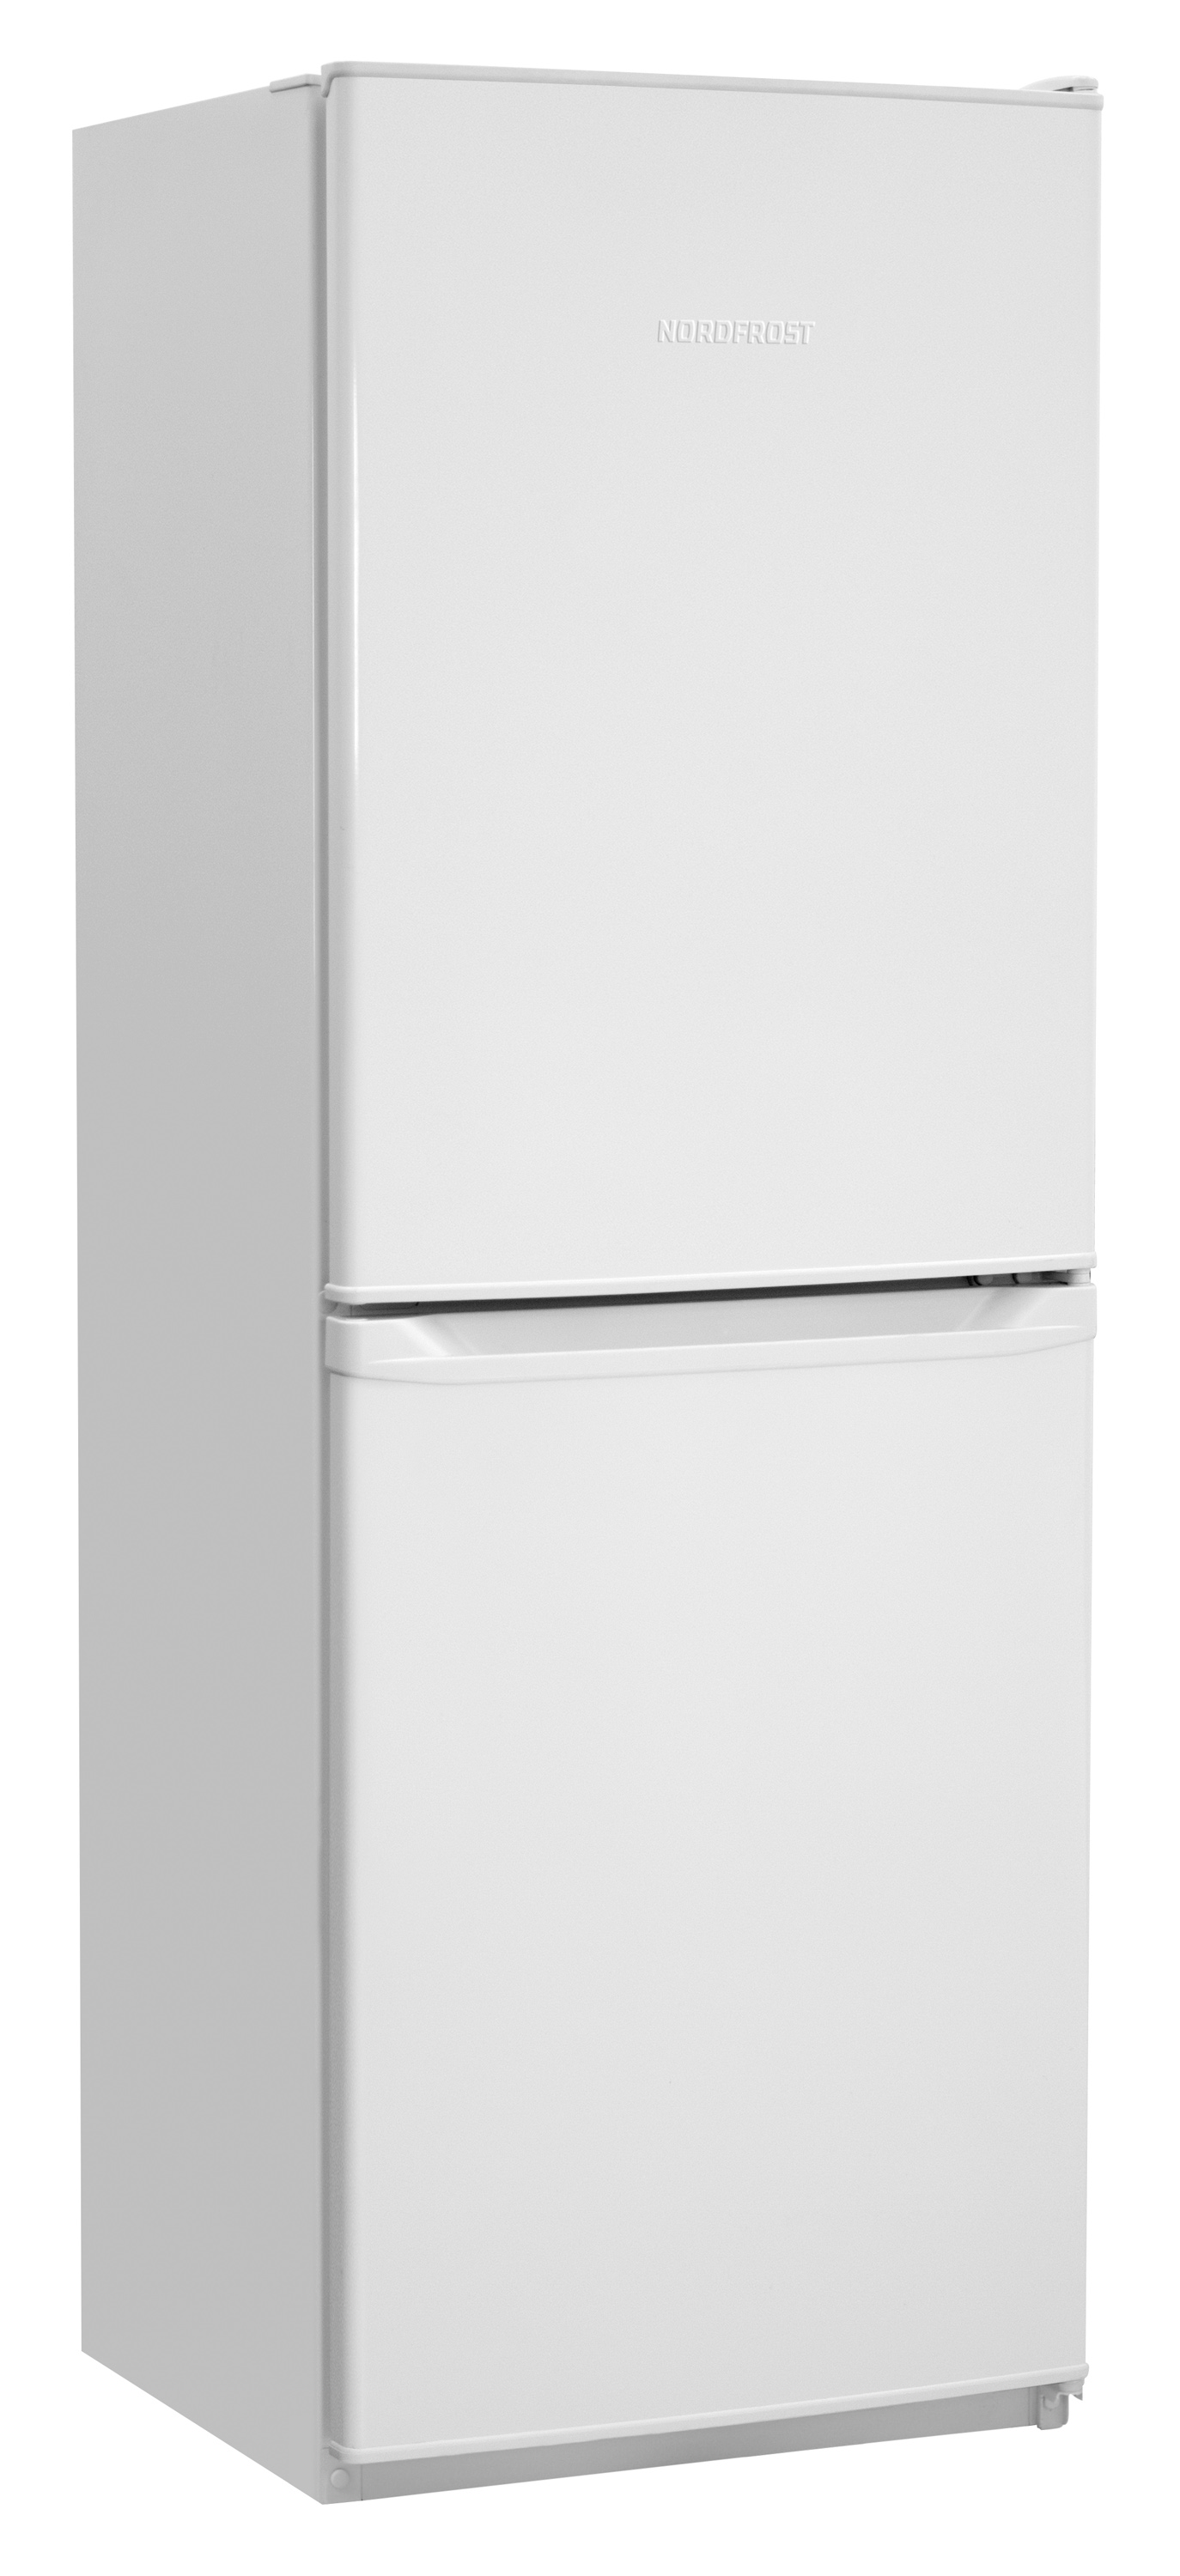 Холодильник NordFrost NRB 151 032 белый многокамерный холодильник nordfrost rfq 510 nfgw inverter